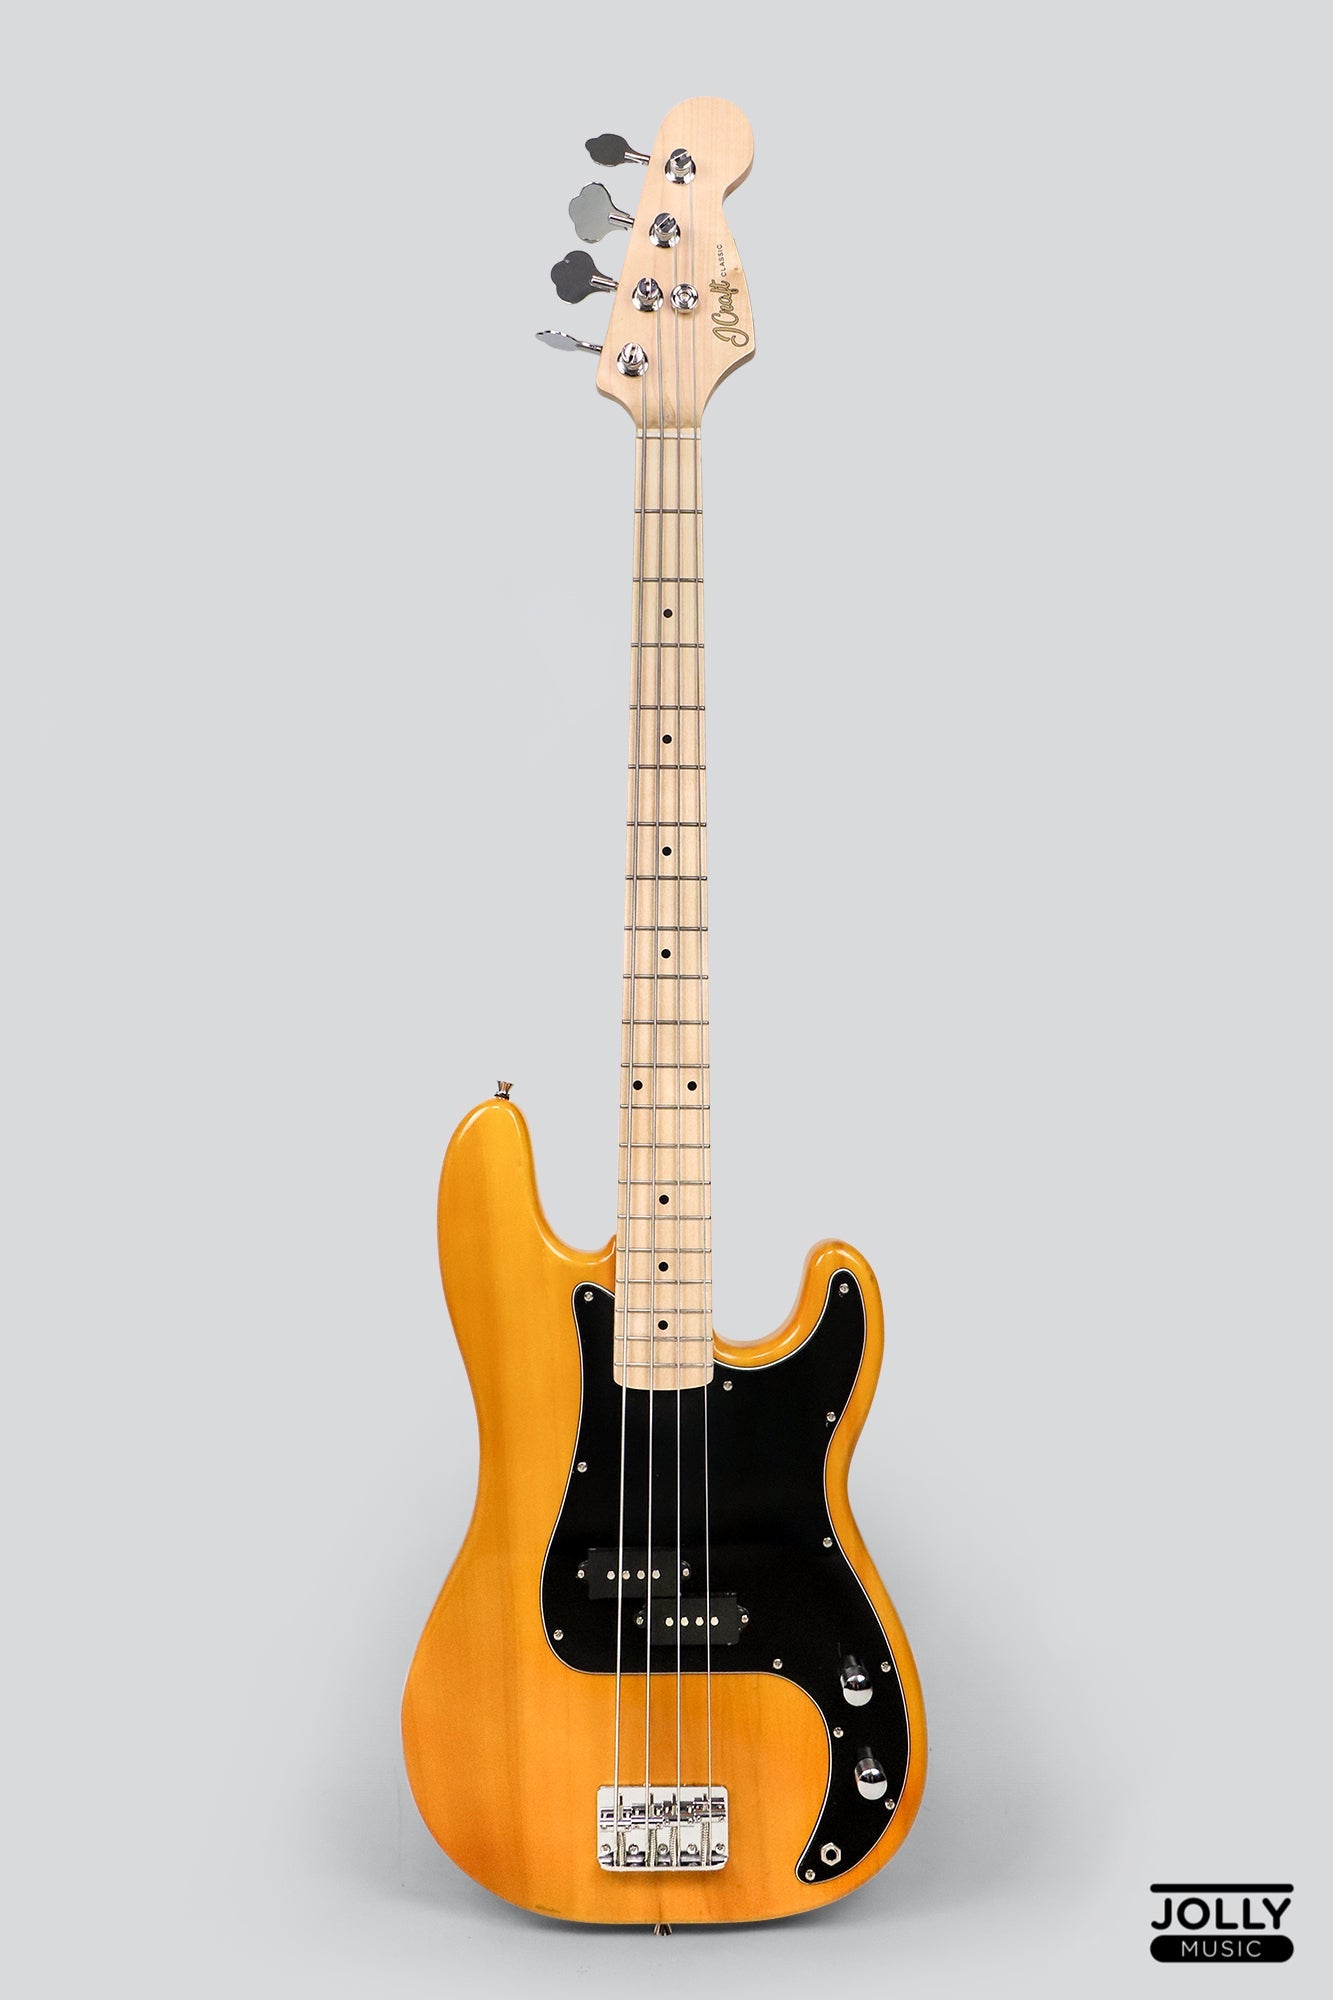 JCraft PB-1 4-String Electric Bass Guitar with Gigbag - Natural